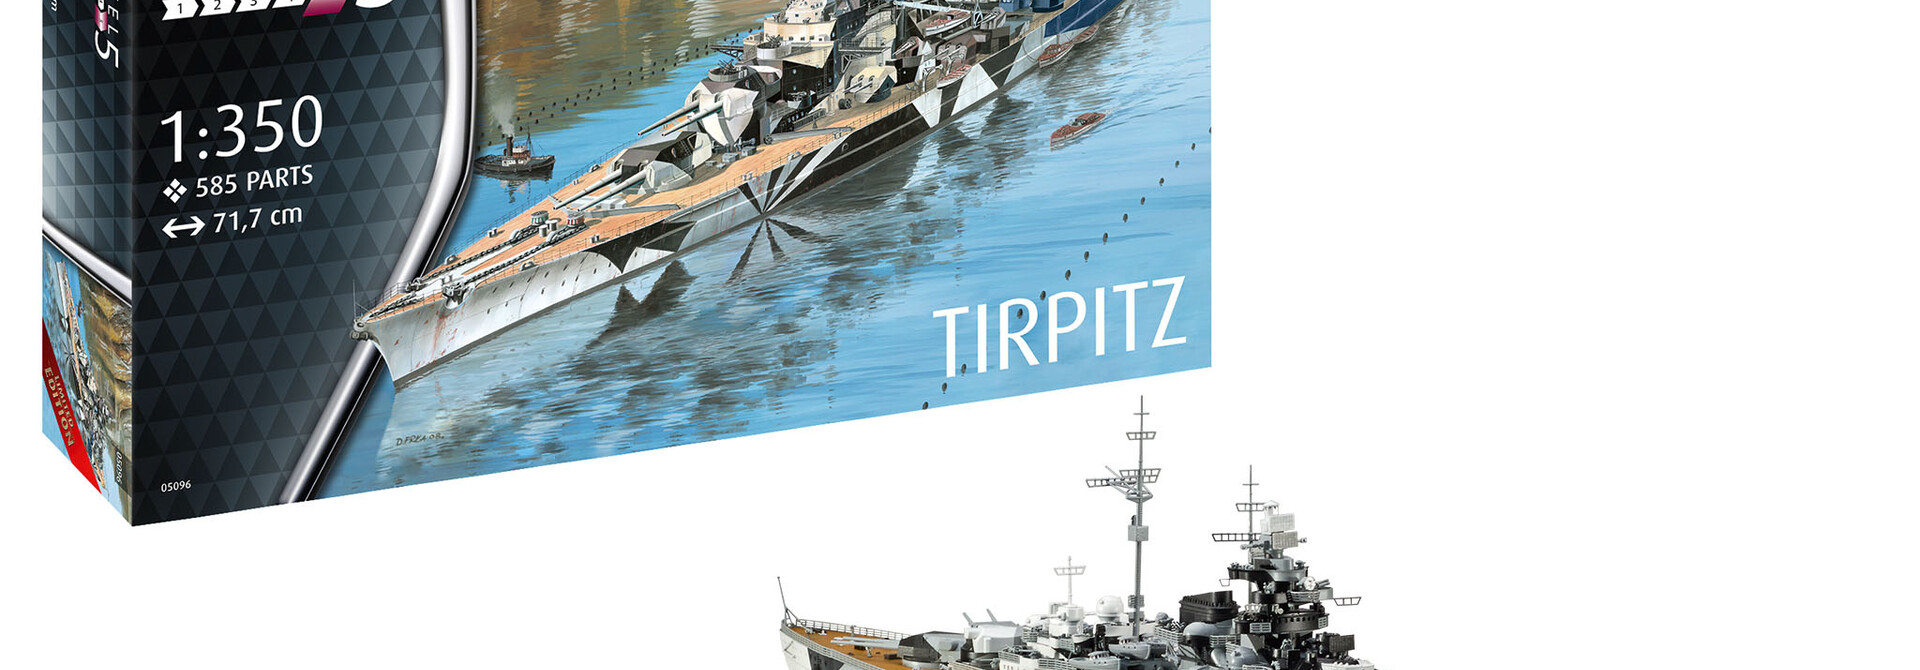 05096 slagschip Tirpitz 1:350 limited editon